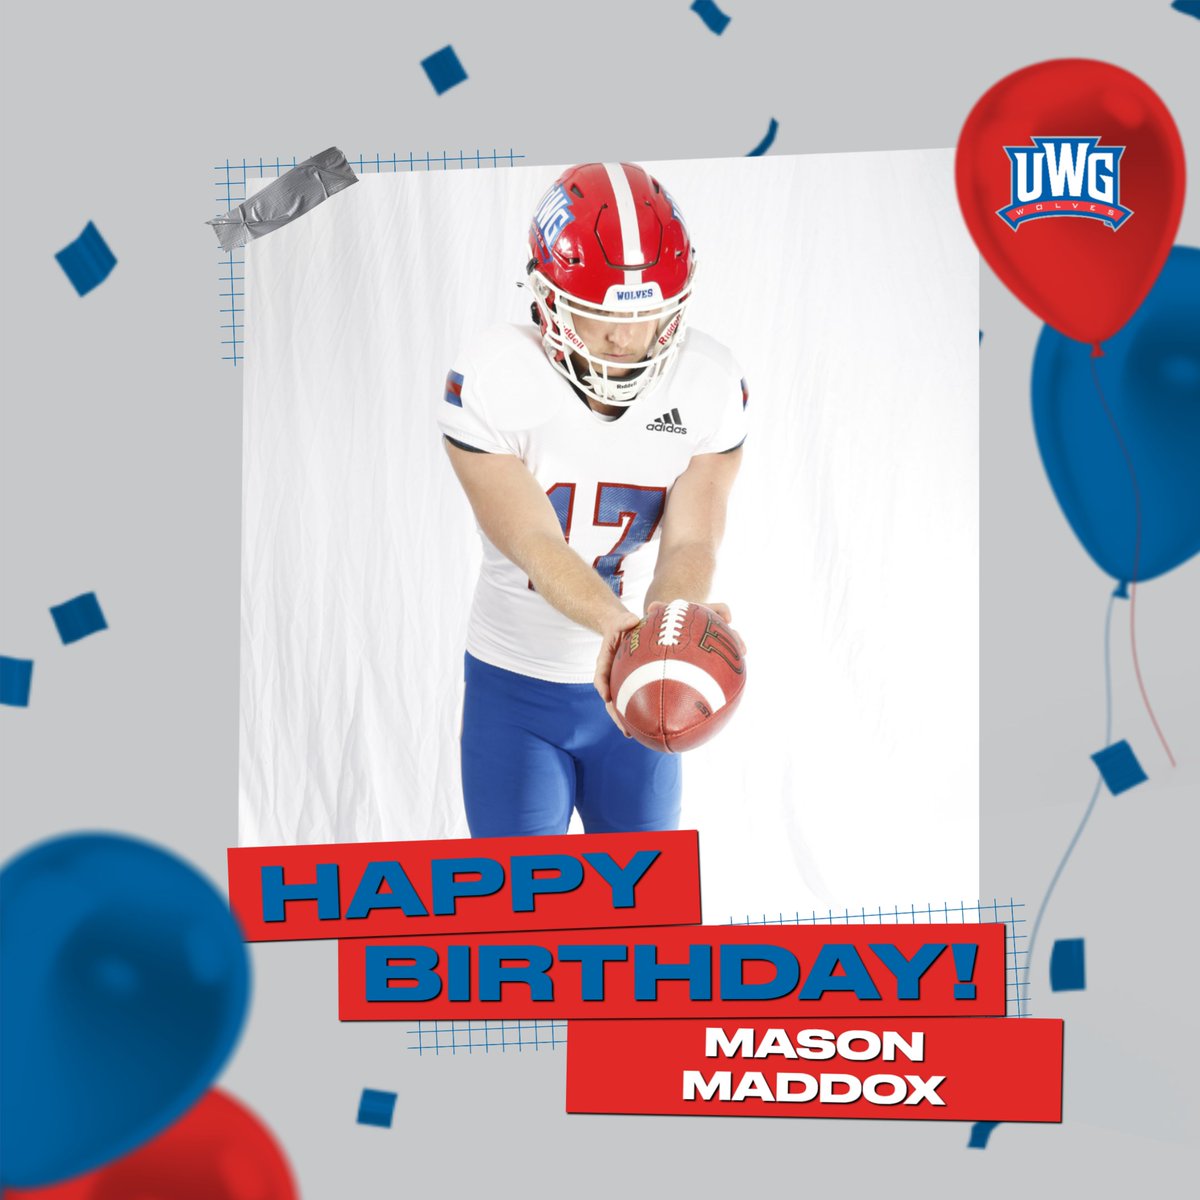 Join us in wishing Mason Maddox a Happy Birthday 🎂🏈 #WeRunTogether